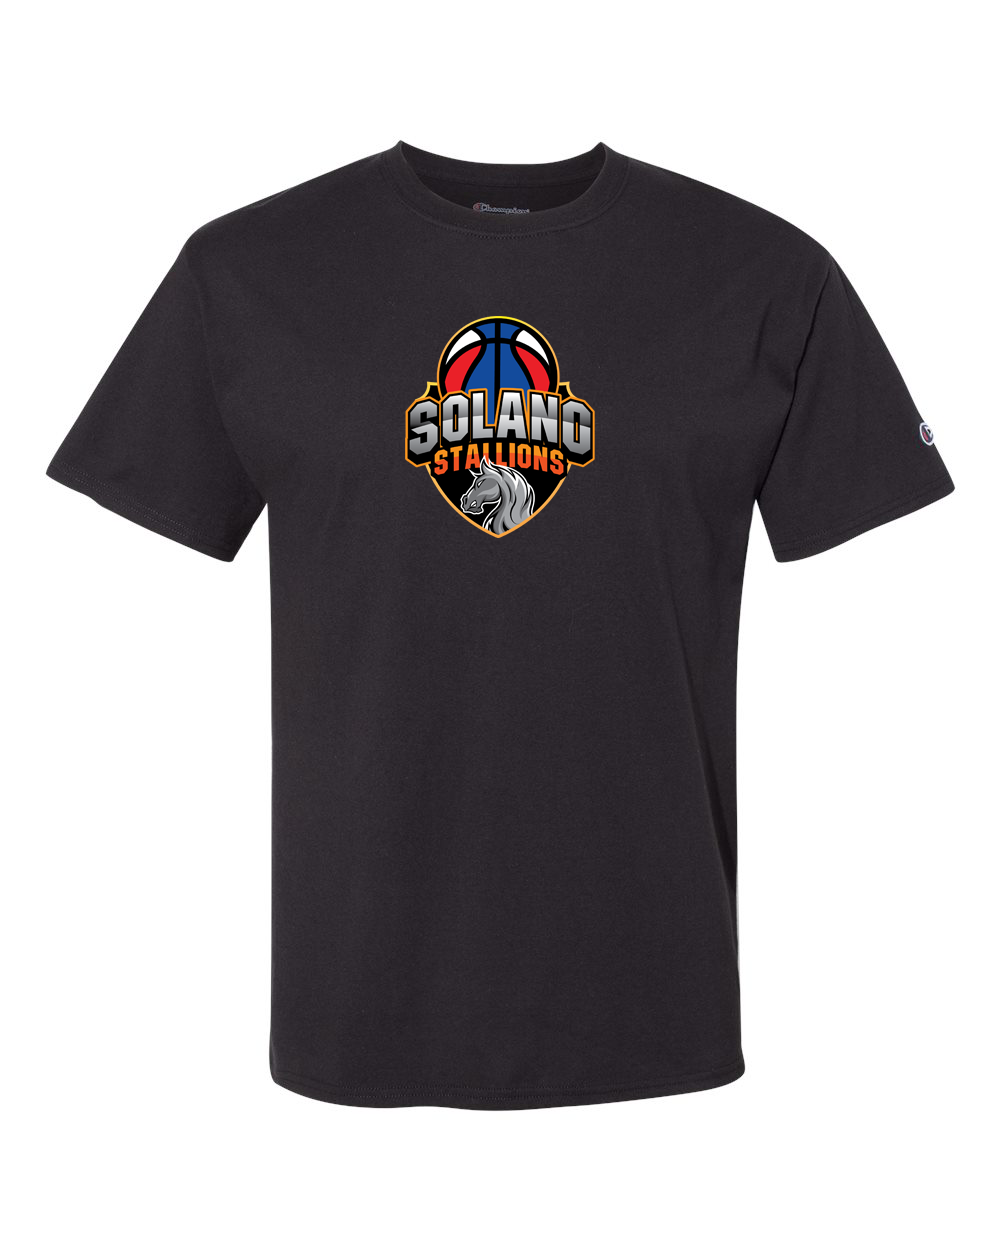 Solano Stallions Champion Short Sleeve T-Shirt